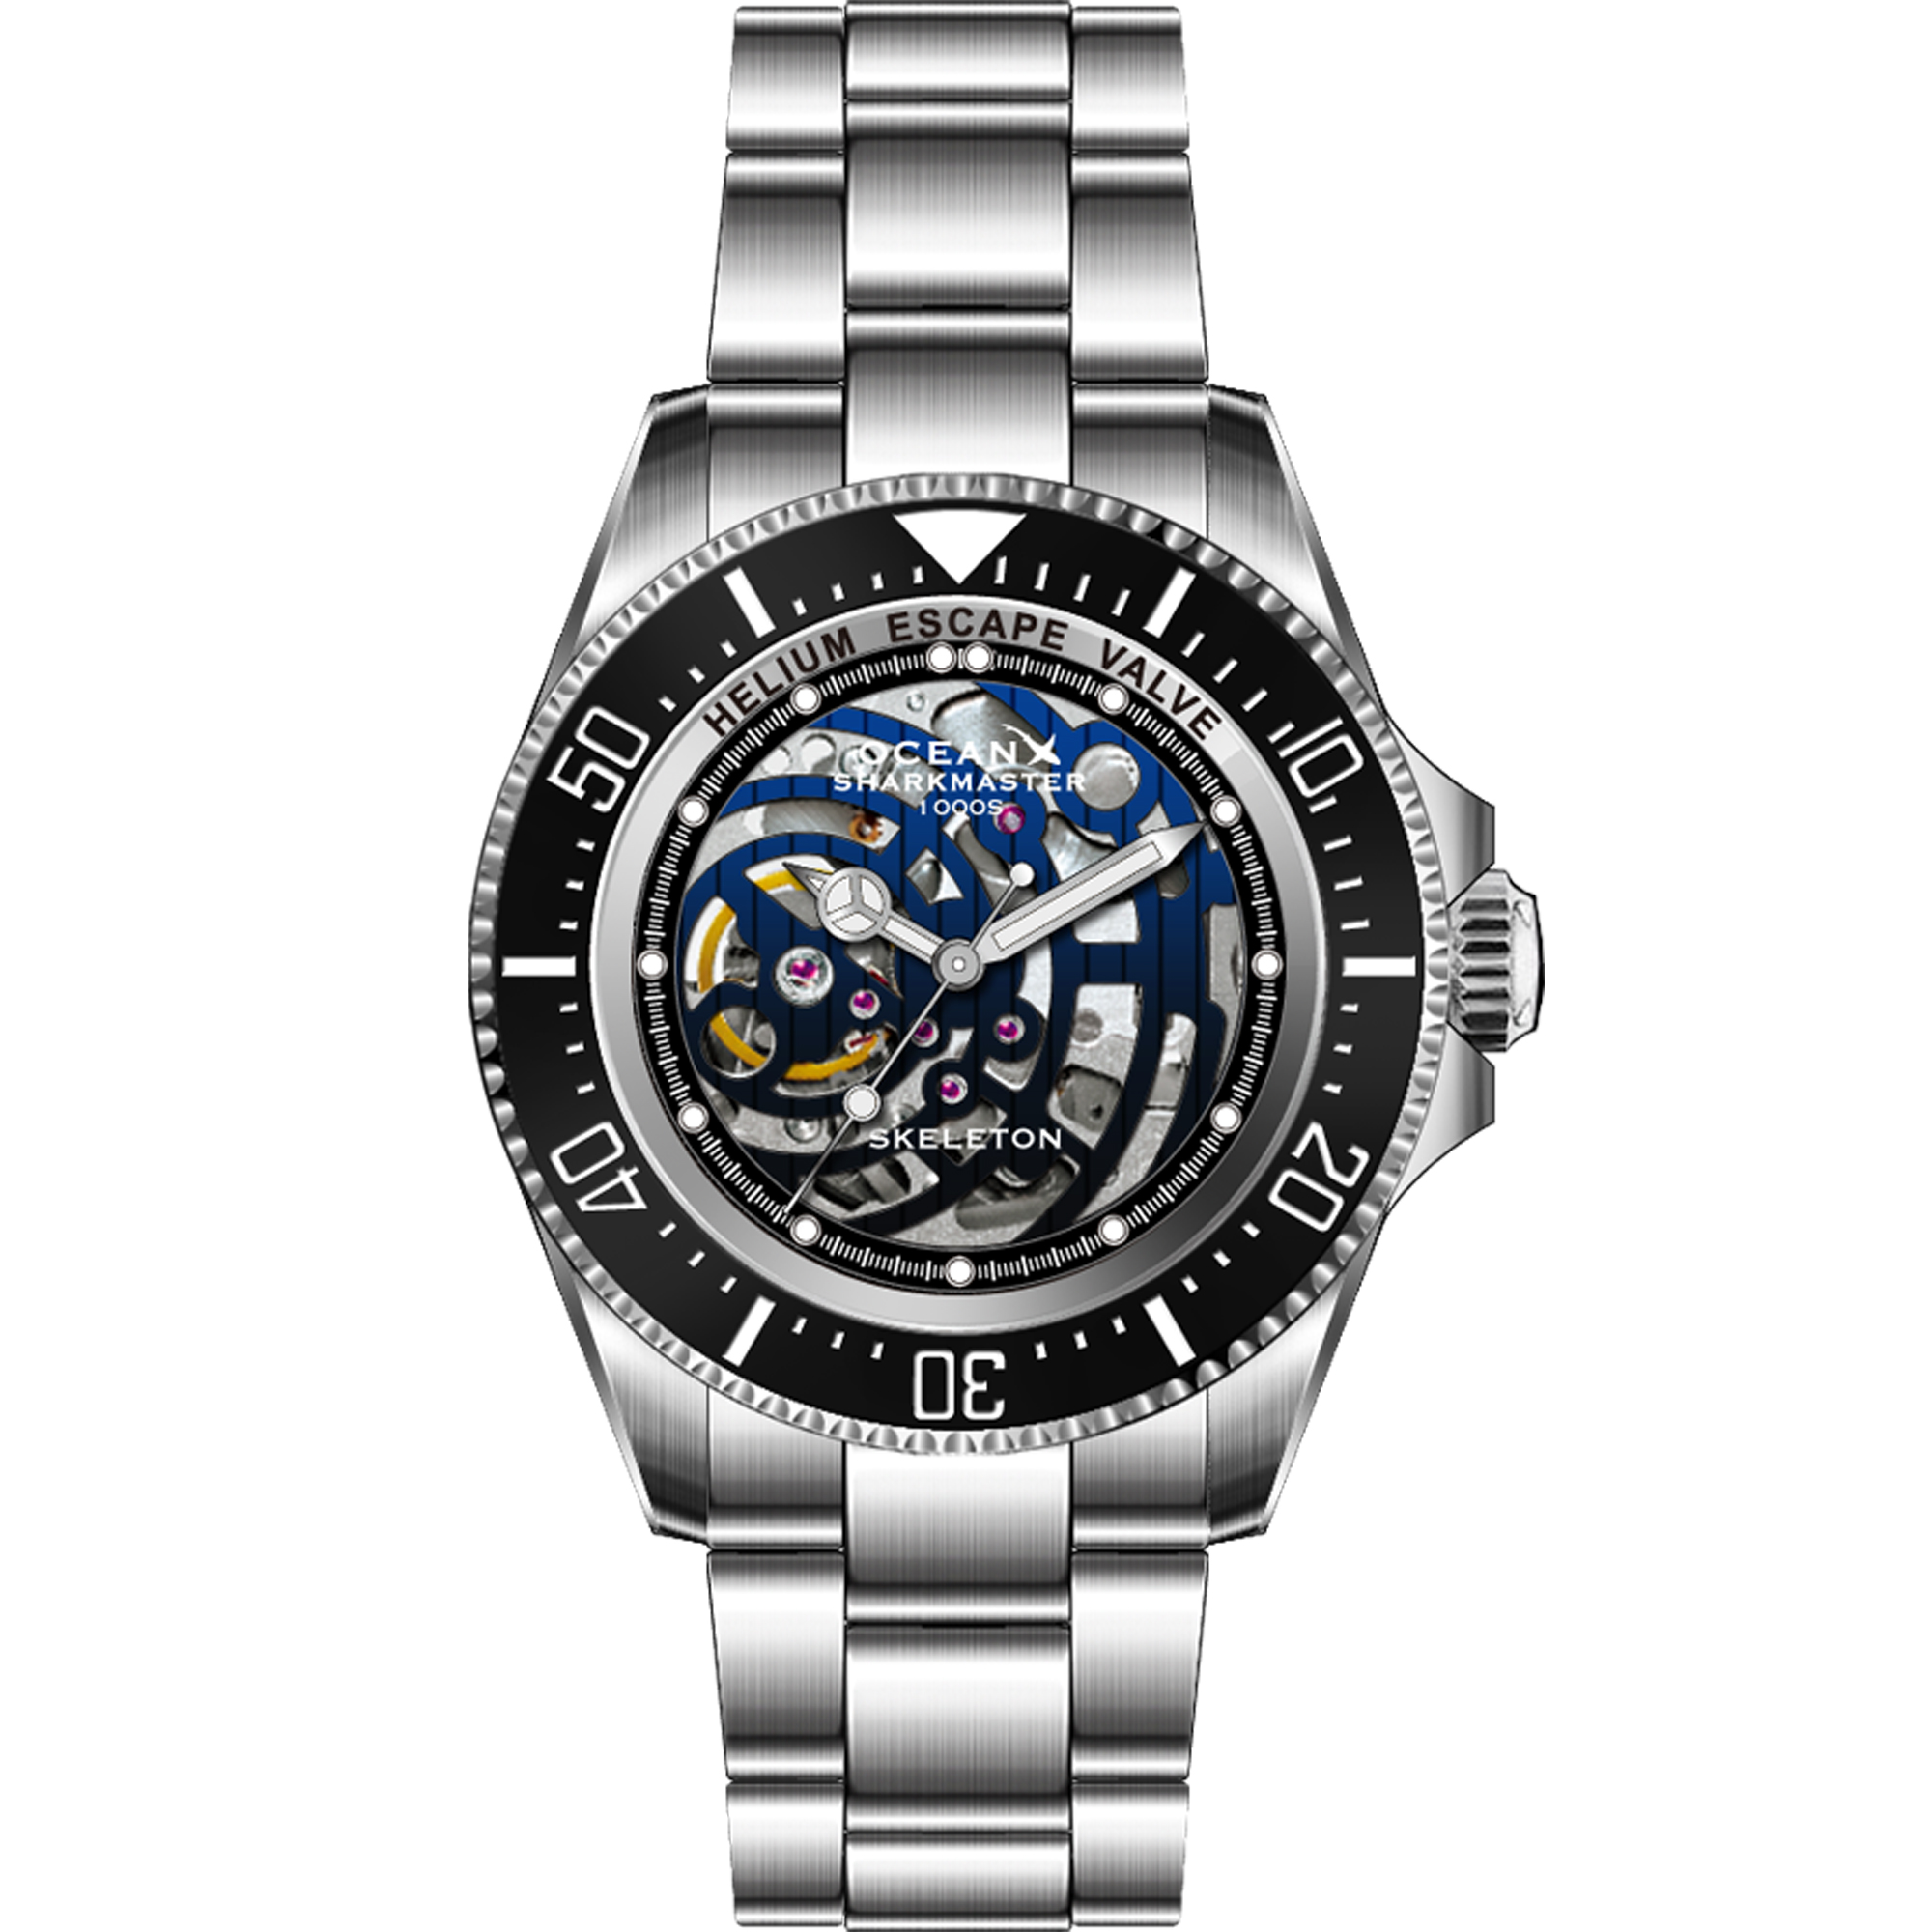 OceanX SHARKMASTER 1000 Automatik Stahl Keramik Datum Saphir Blau Herren  Uhr | eBay